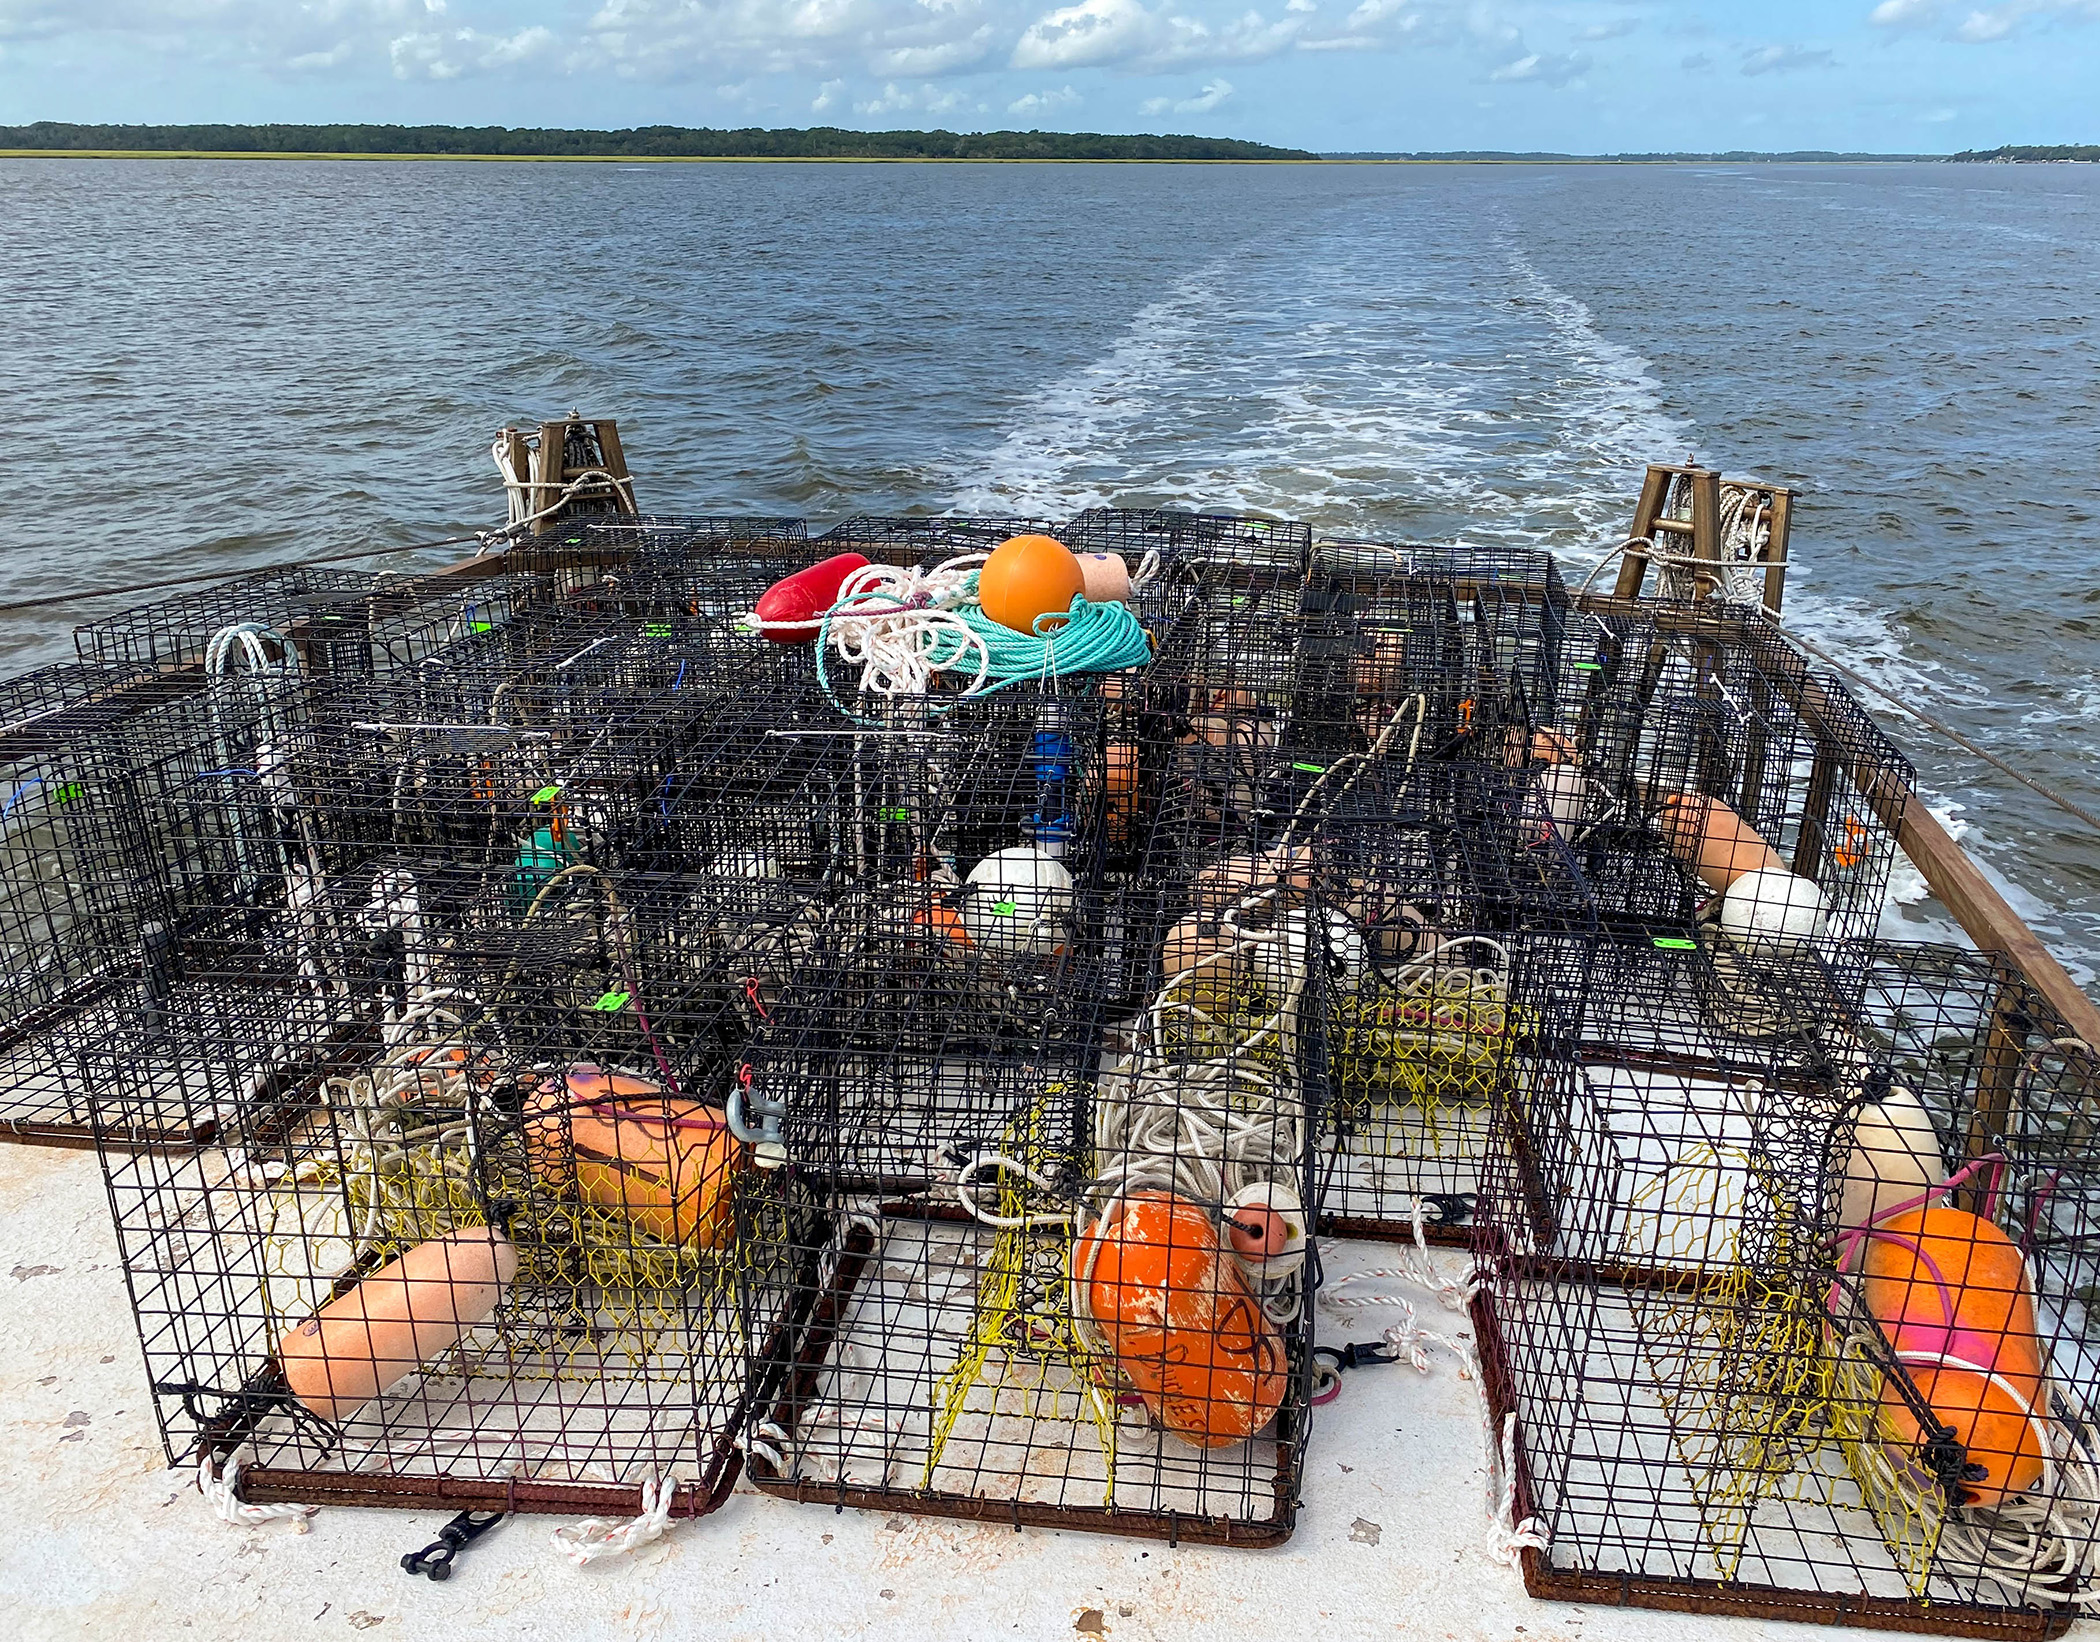 https://news.uga.edu/wp-content/uploads/2021/03/2009-Fisheries-Photos-Ropeless-Fishing-Gear-15.jpg